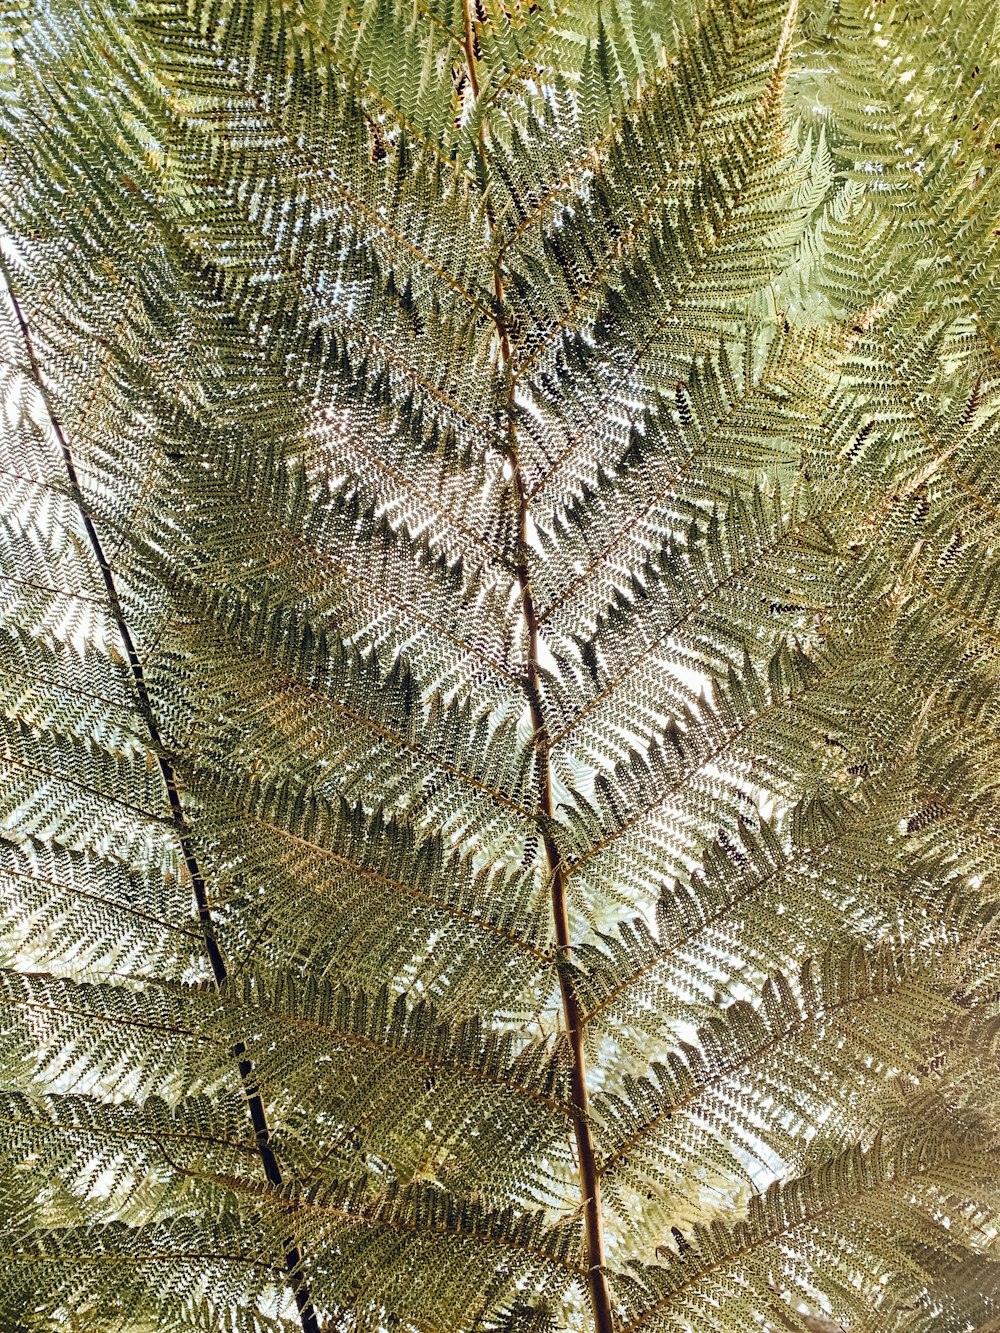 a close up view of a fern leaf